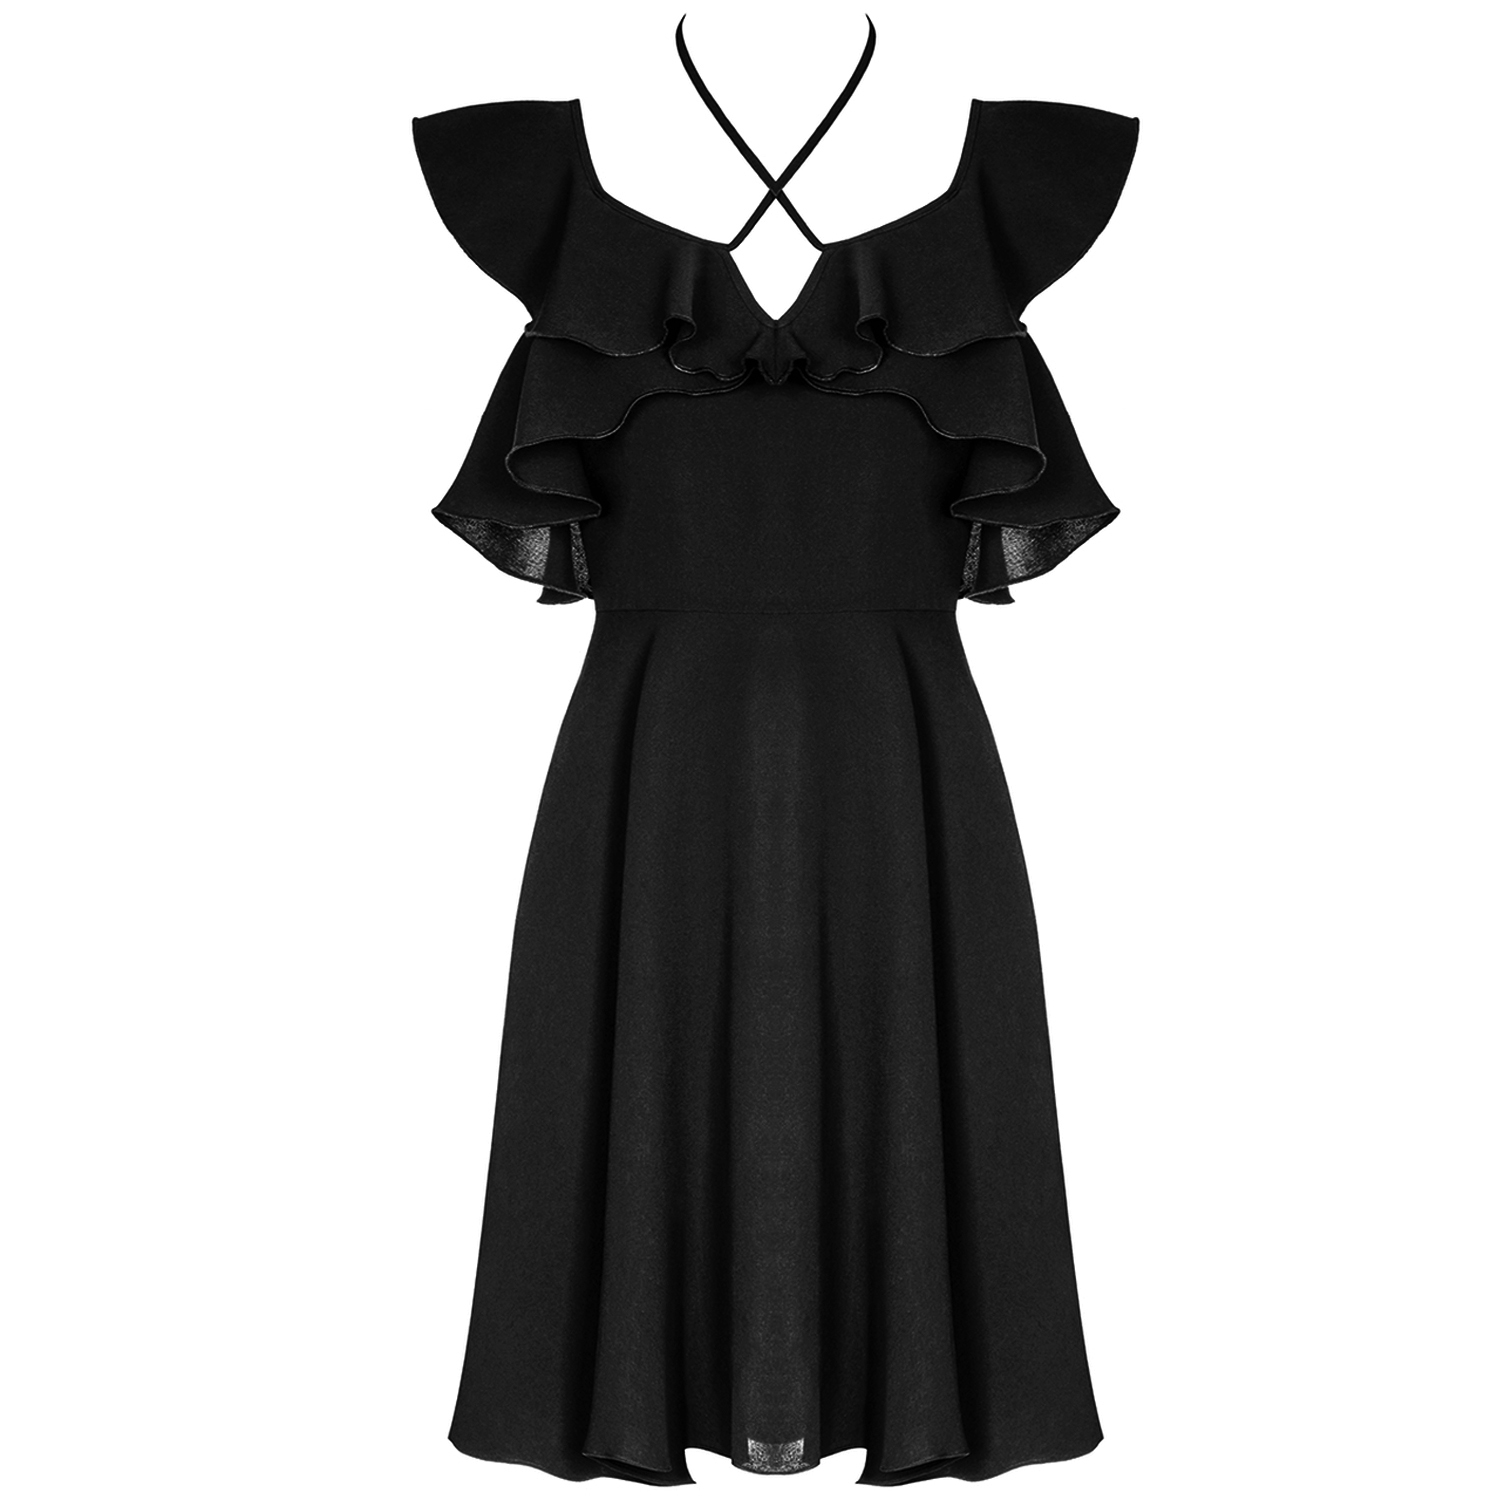 Black Lace Gothic Steampunk Party Dress - Petunia Rocks